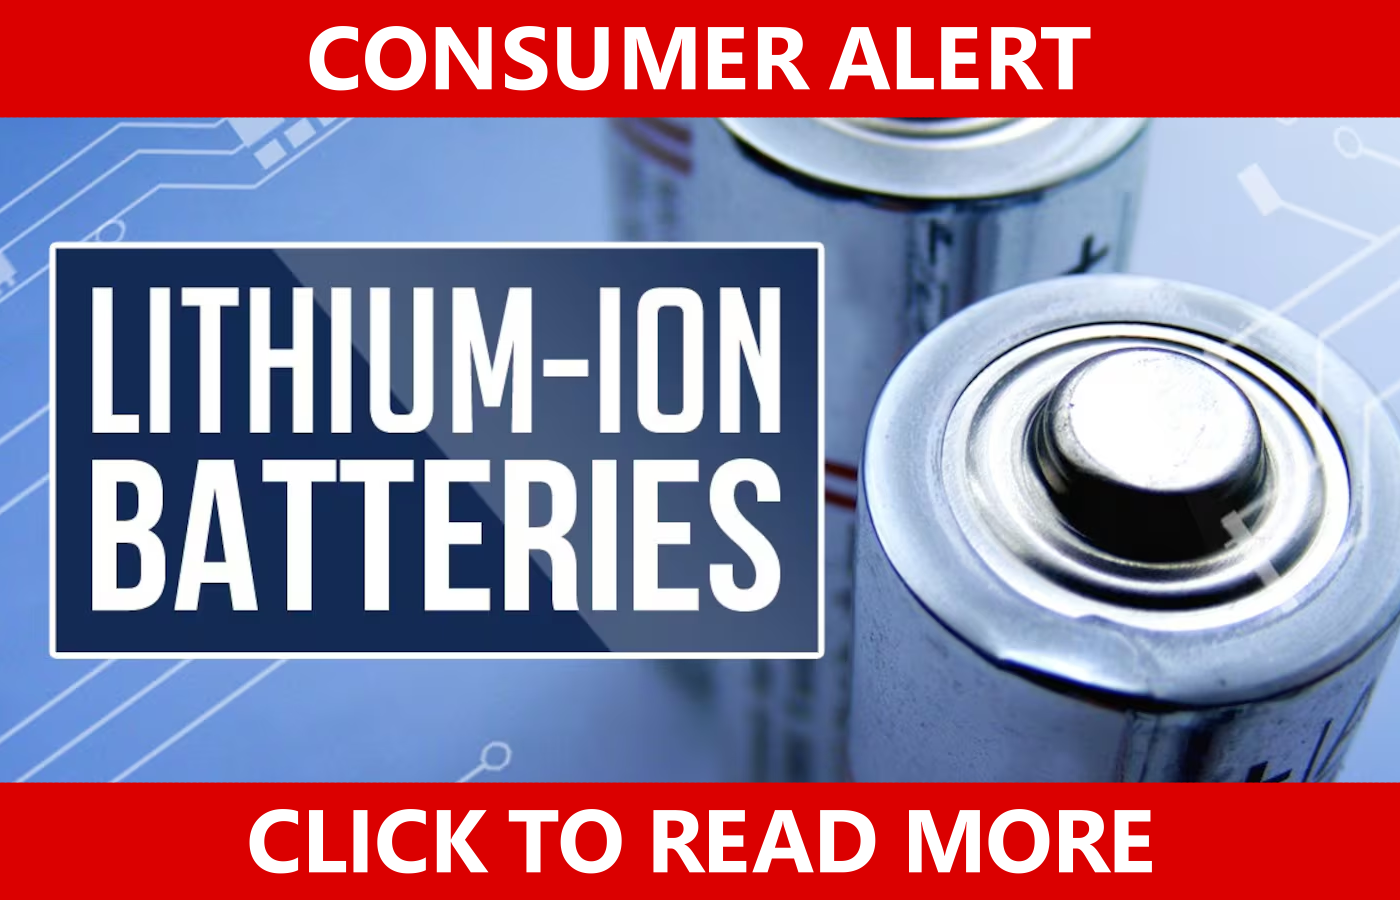 Lithium Batteries Alert